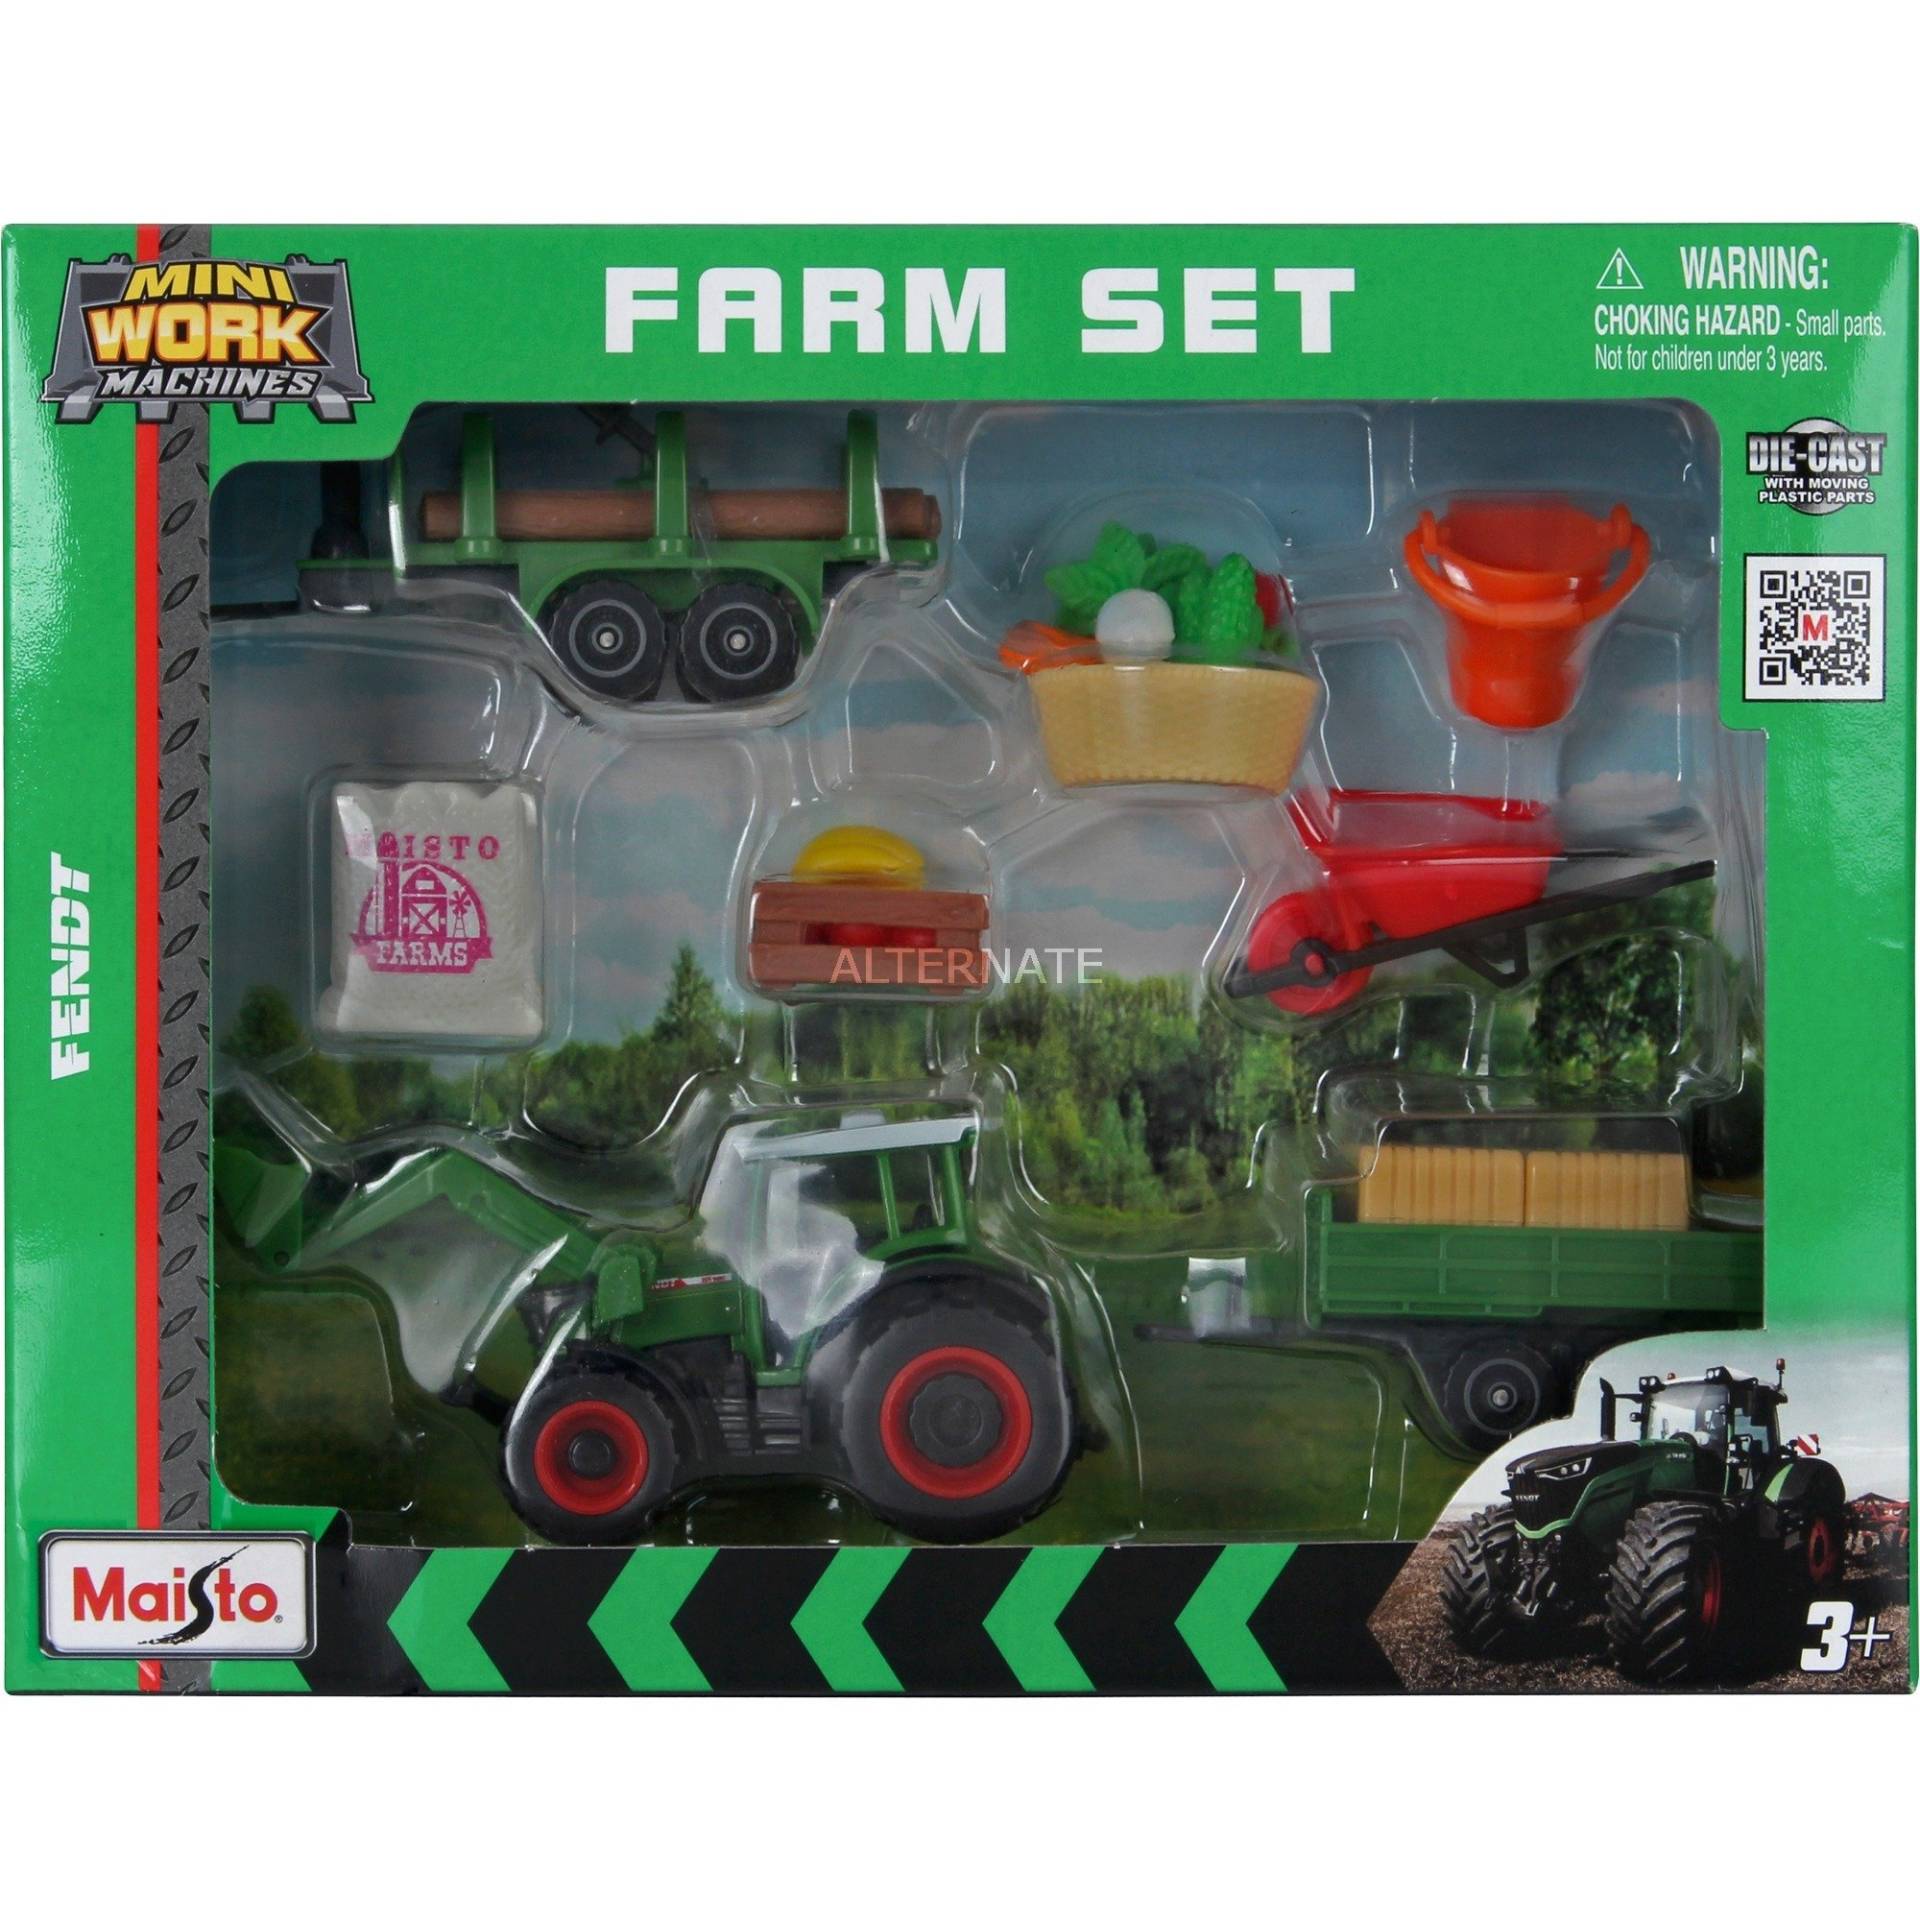 Mini Work Machines Fendt Farm Play Set , Modellfahrzeug von Maisto